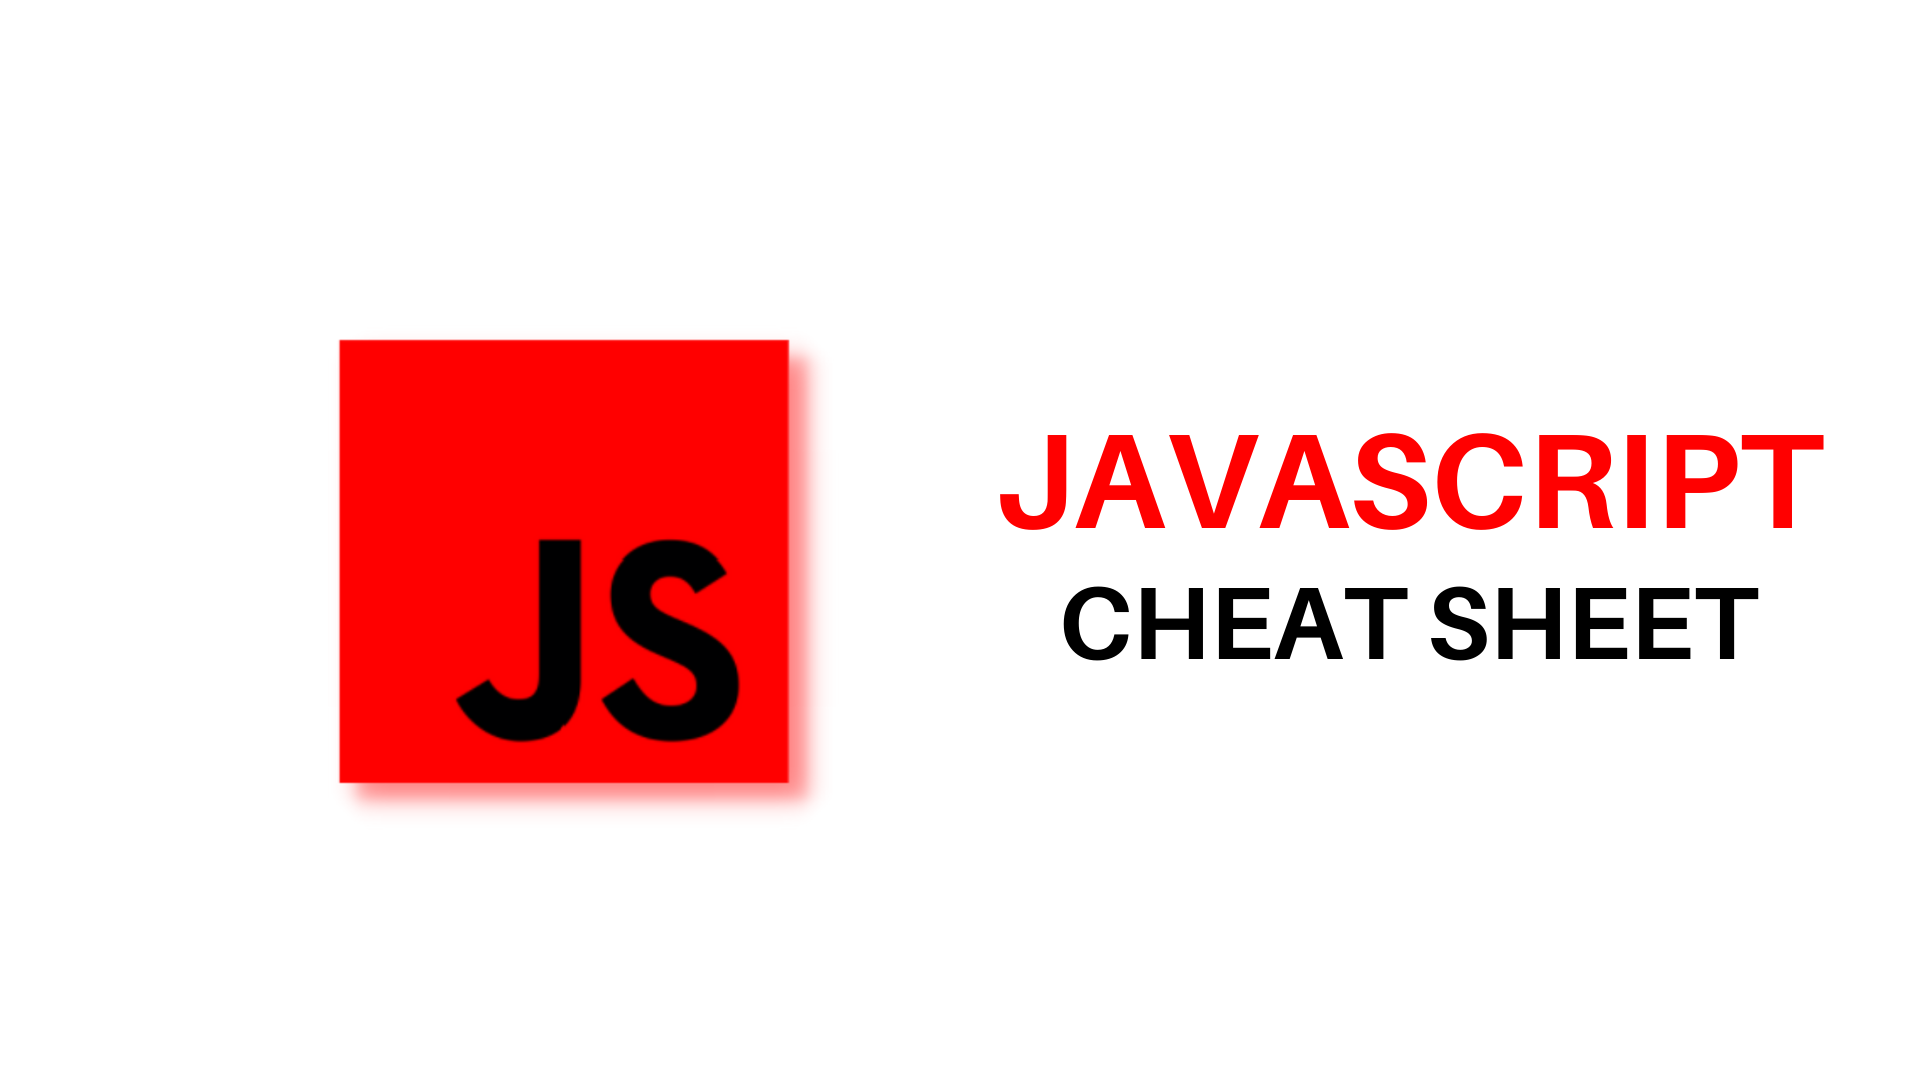 Javascript cheatsheet feautred image programming cheatsheet,Machine learning cheatsheet,AI cheatsheet,datascience cheatsheet